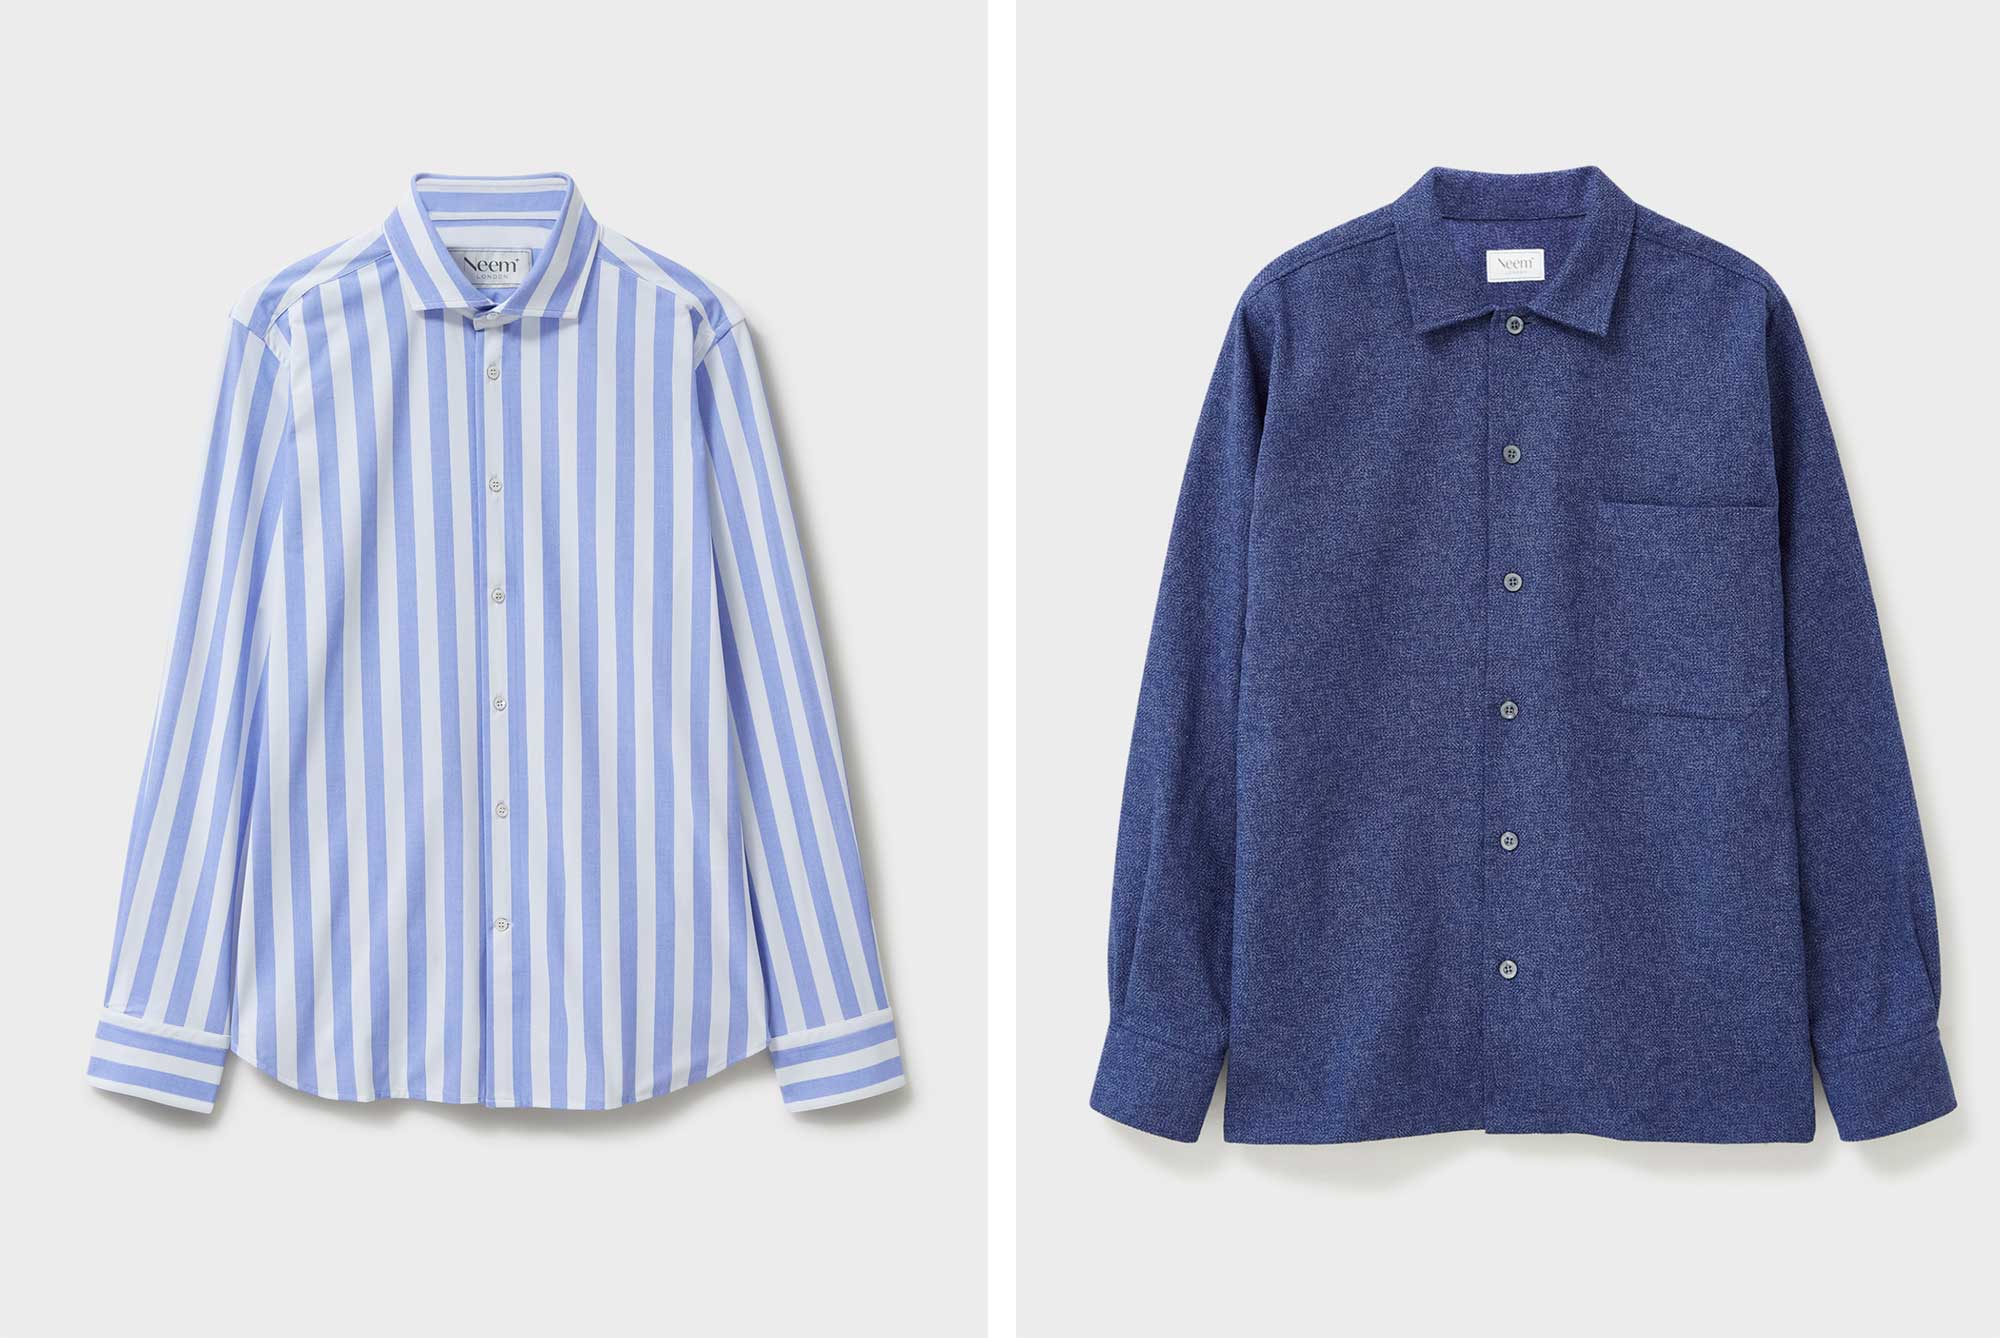 On Left: Neem London comfort cutaway sky stripe shirt | On Right: Neem London blue cross weave shirt